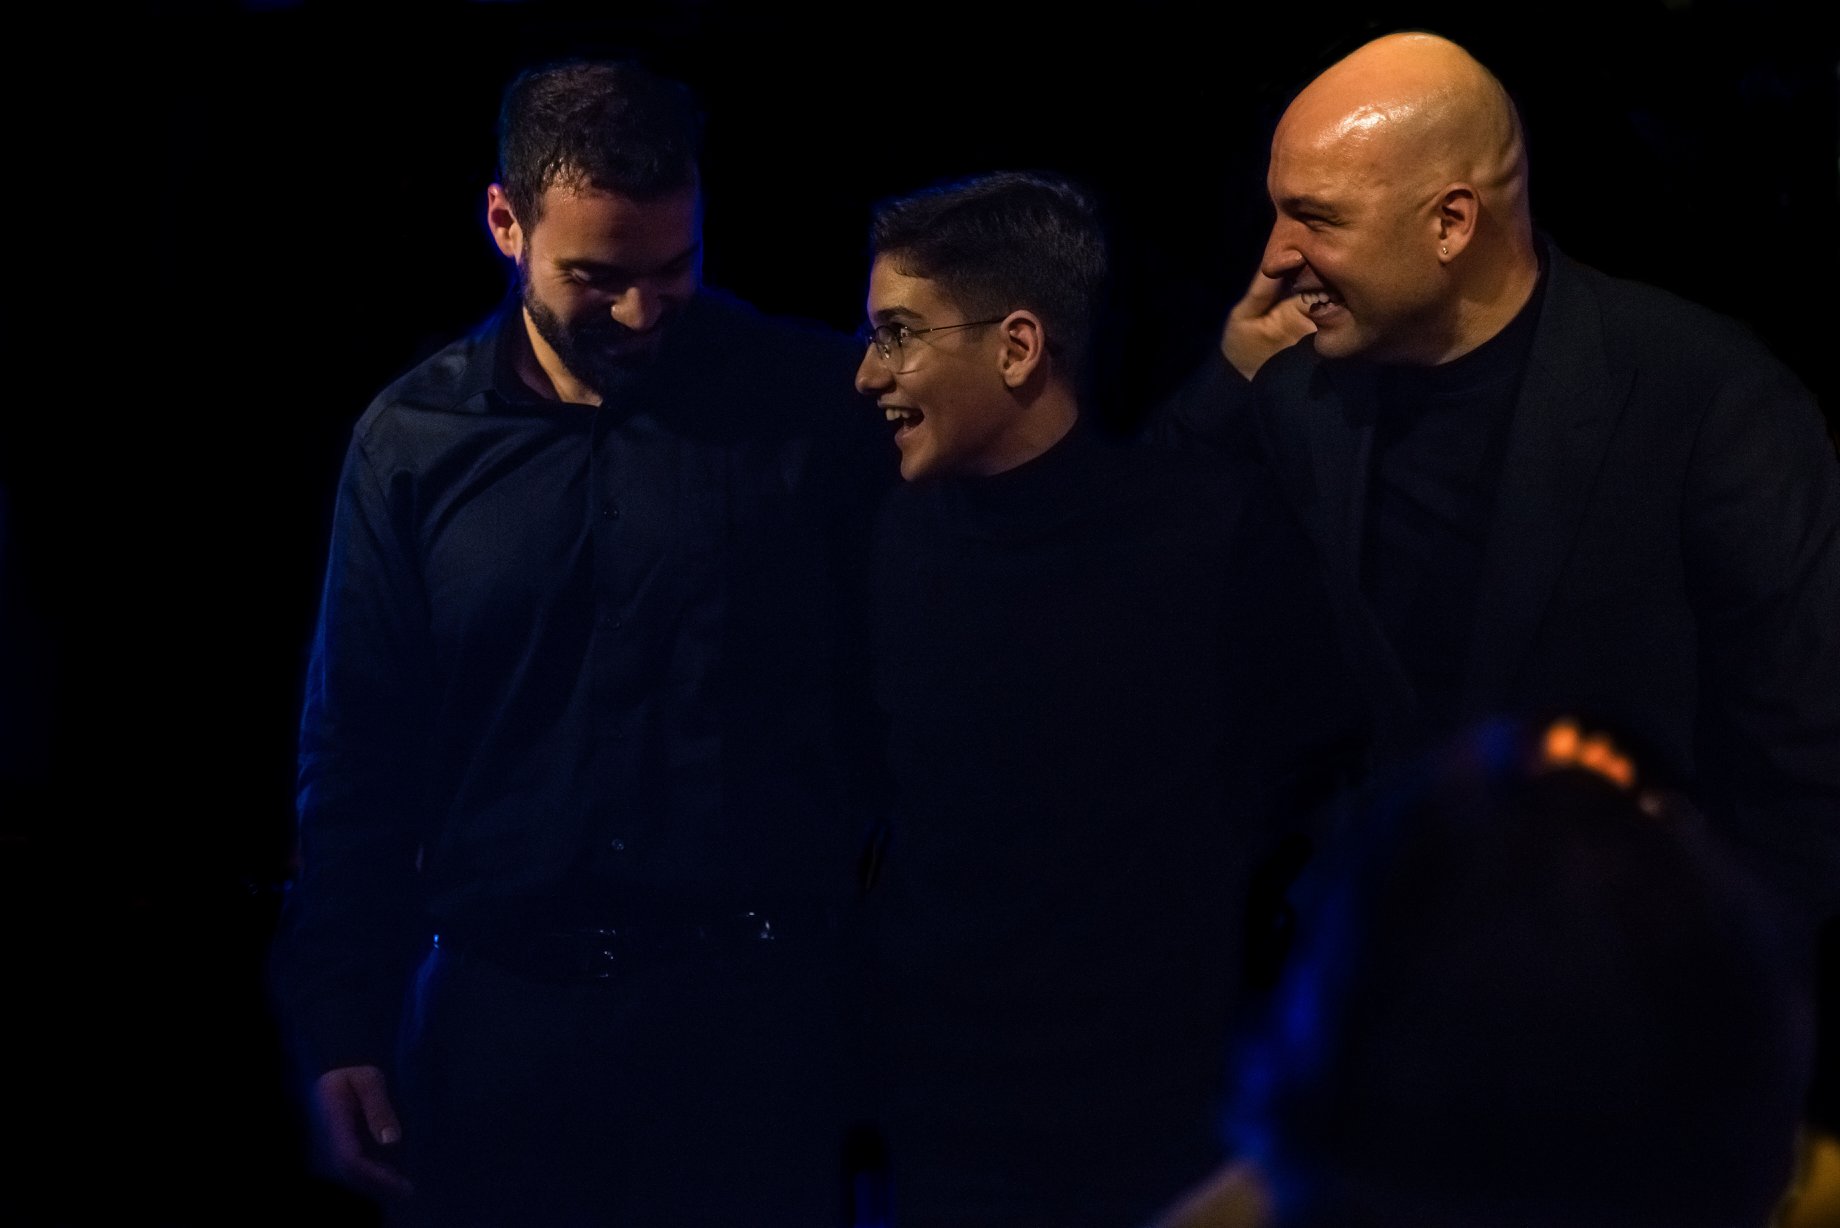 Hakan Başar Trio İstanbul and Ankara shows in February